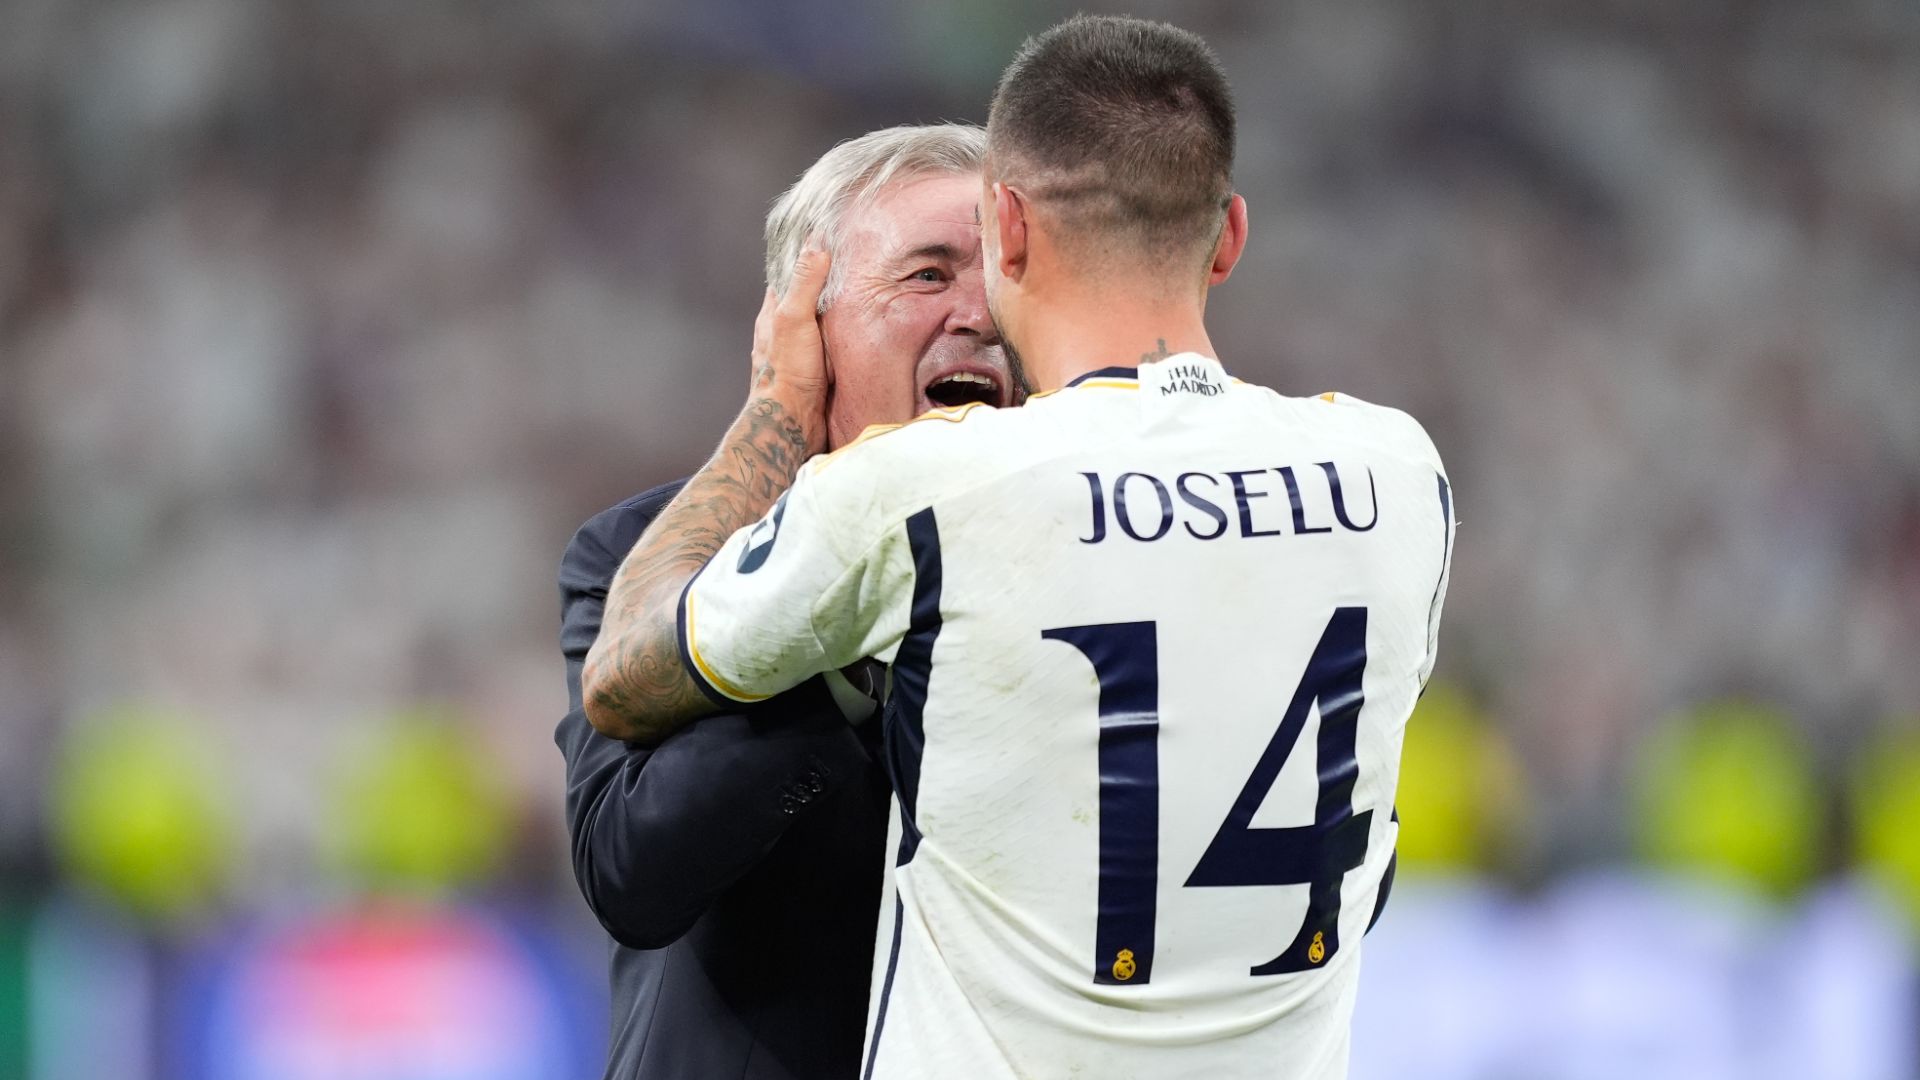 Ancelotti salutes super sub Joselu